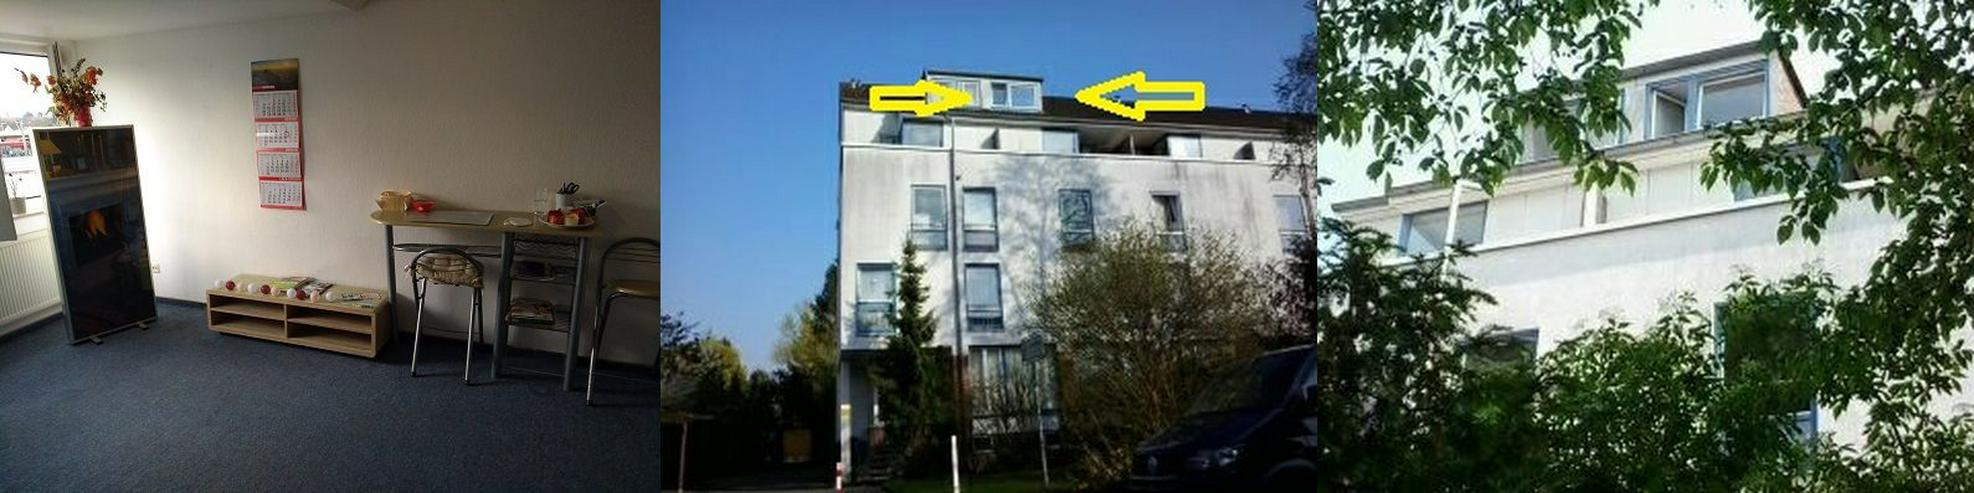 Bild 5: LUH - CMG - PZH  Apartment Whg Hannover Nord